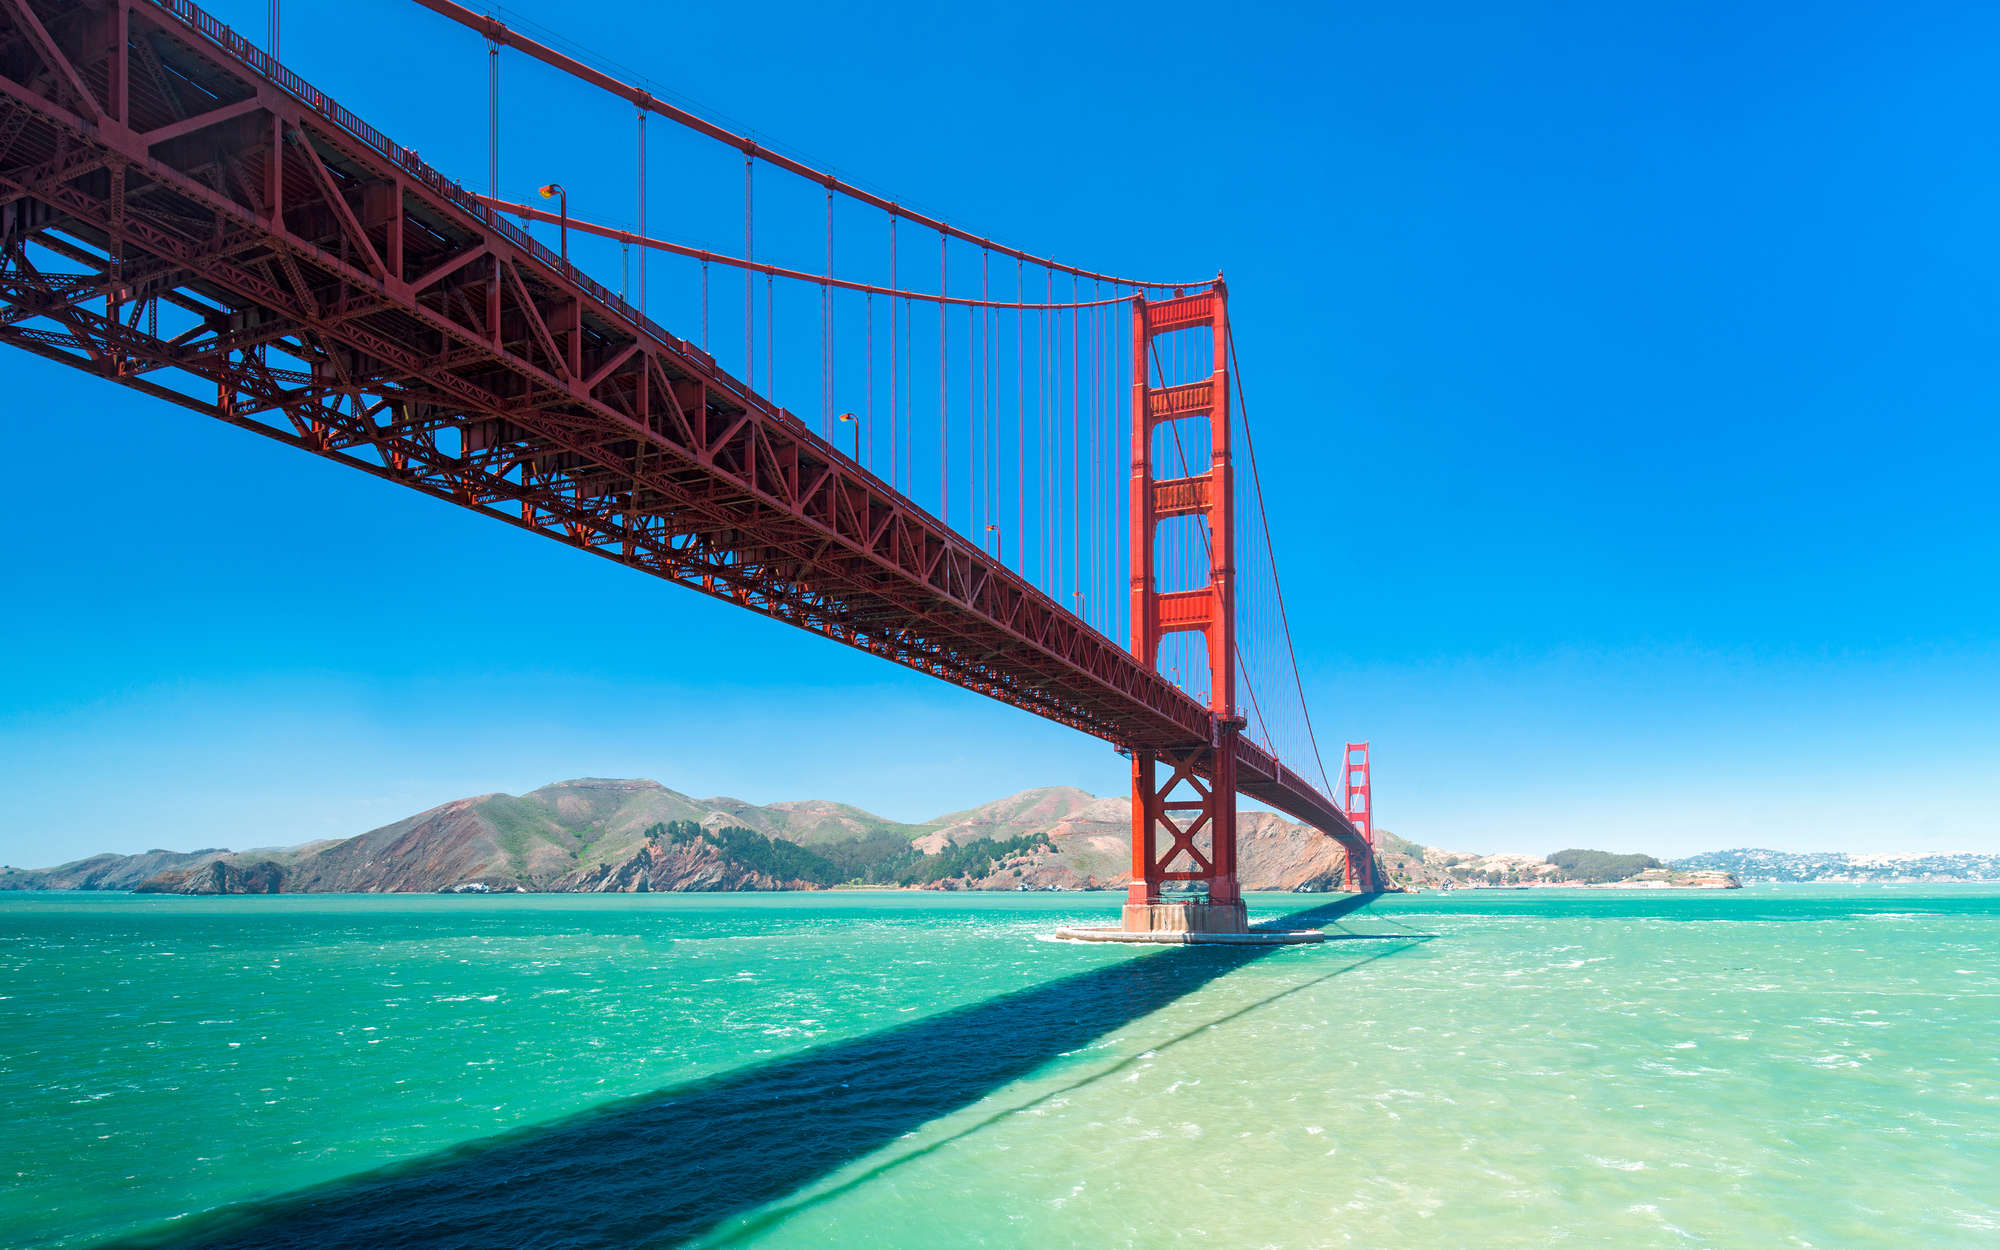             Golden Gate Bridge in San Francisco - parelmoer glad fleece
        